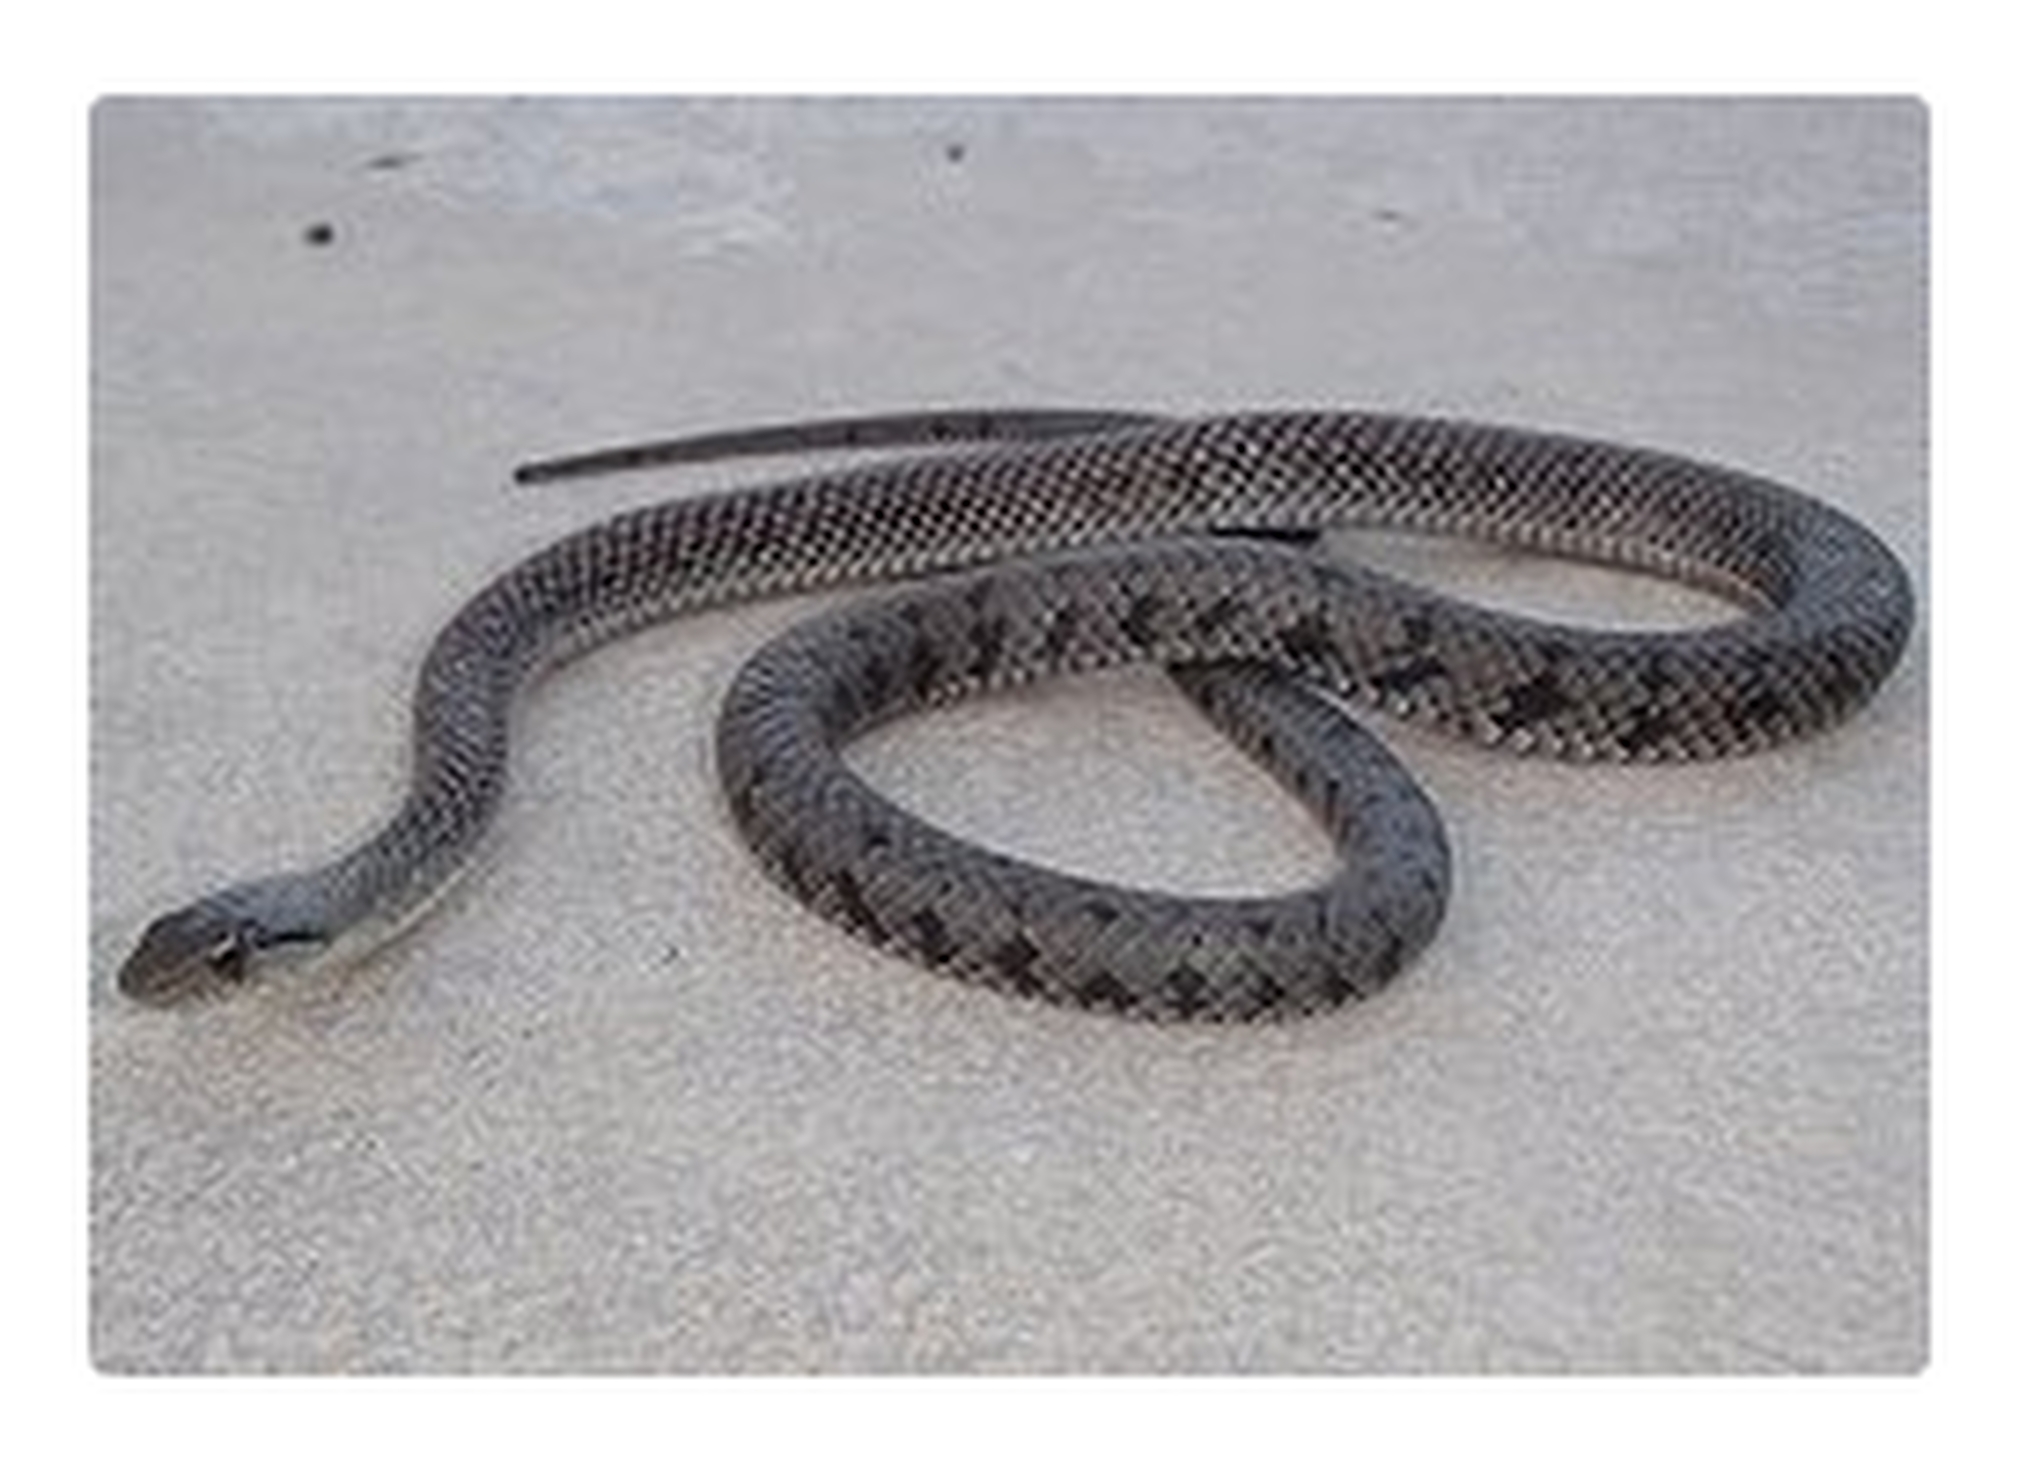 fernandina island racer snakes